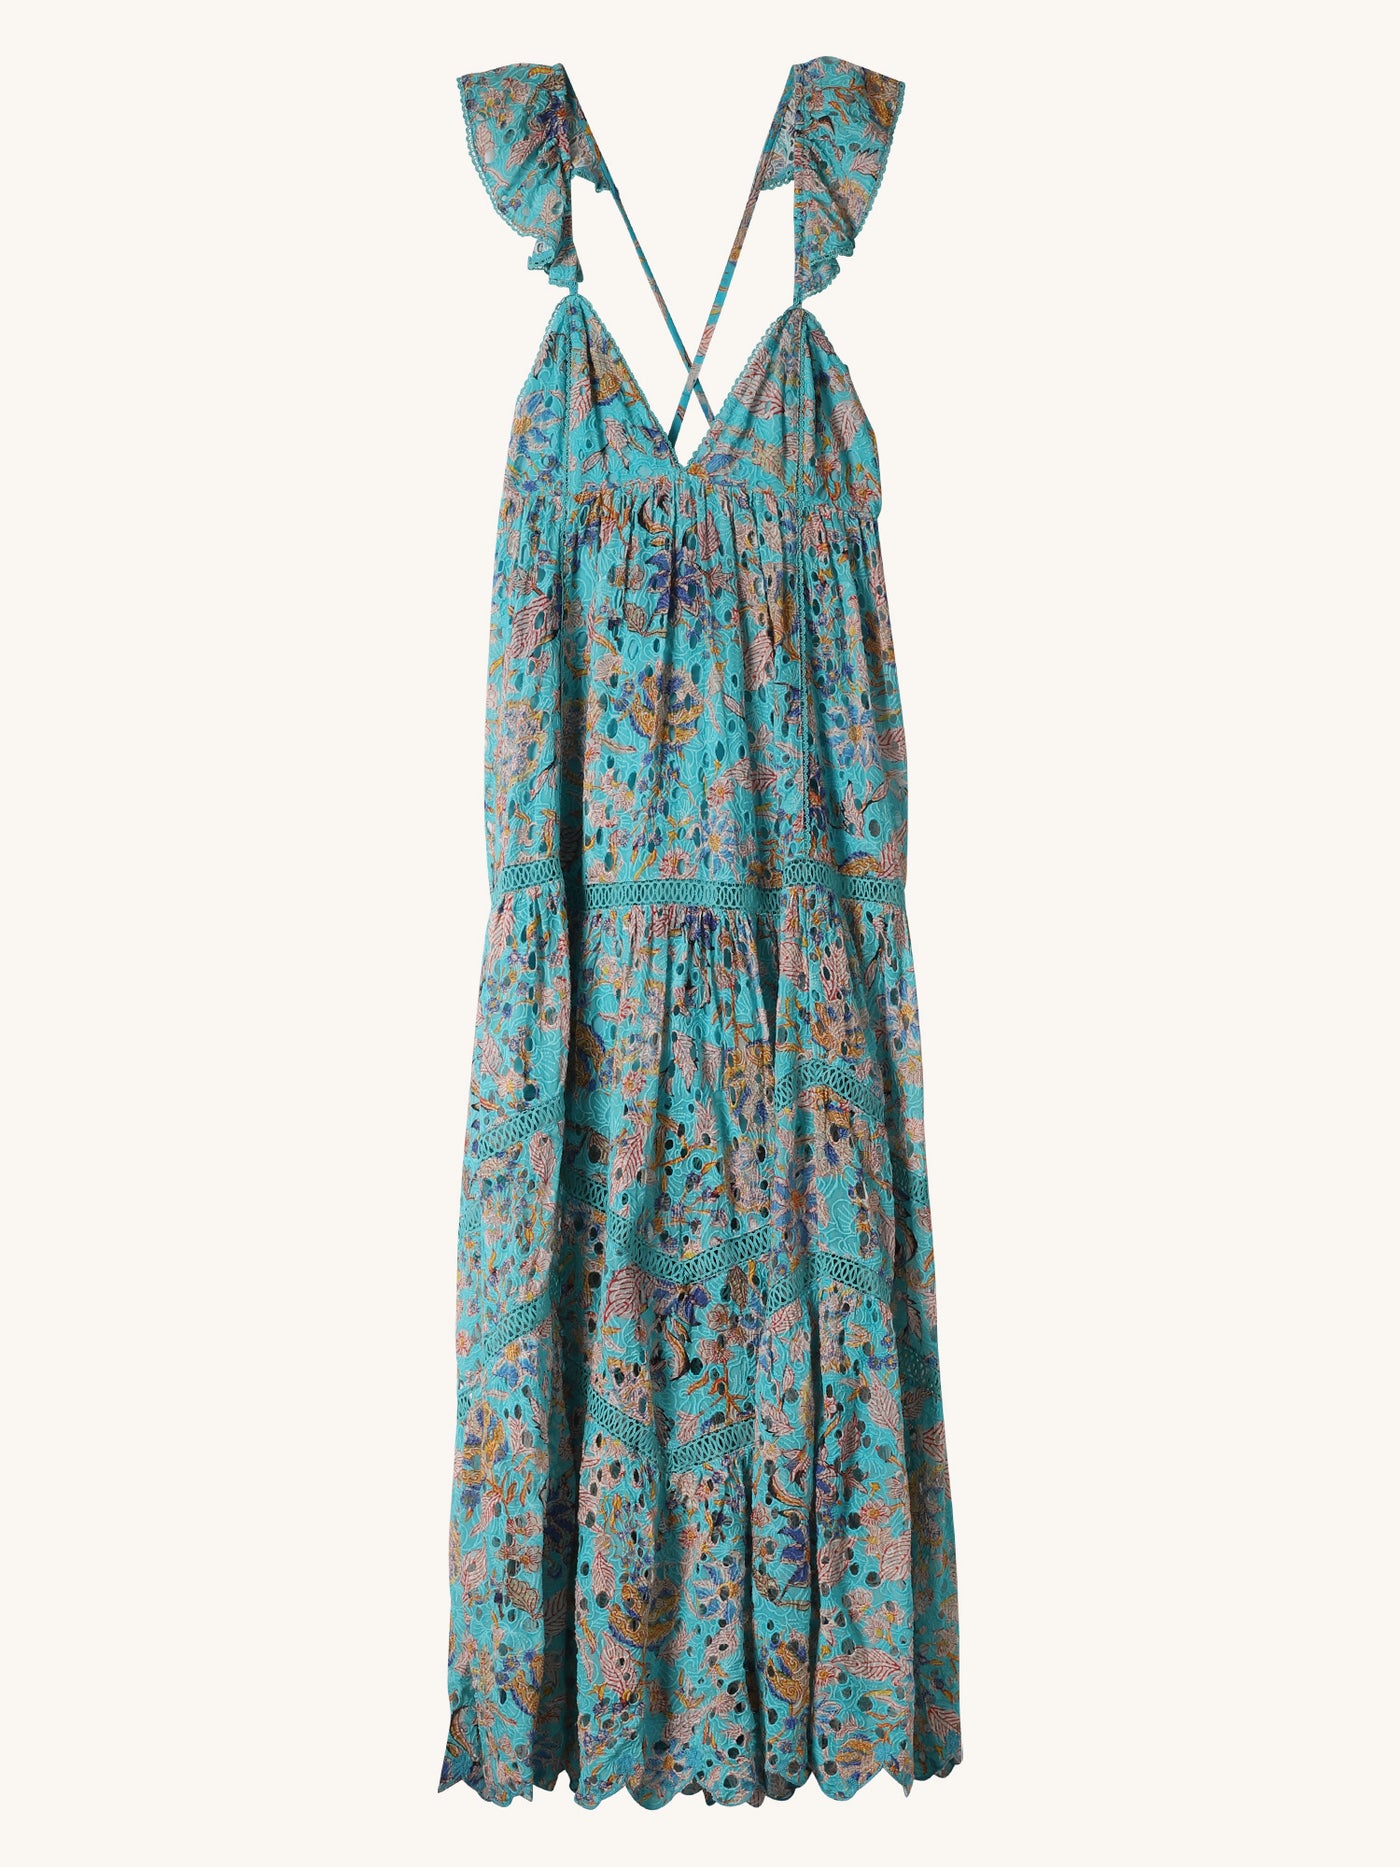 Turquoise Printed Maxi Dress